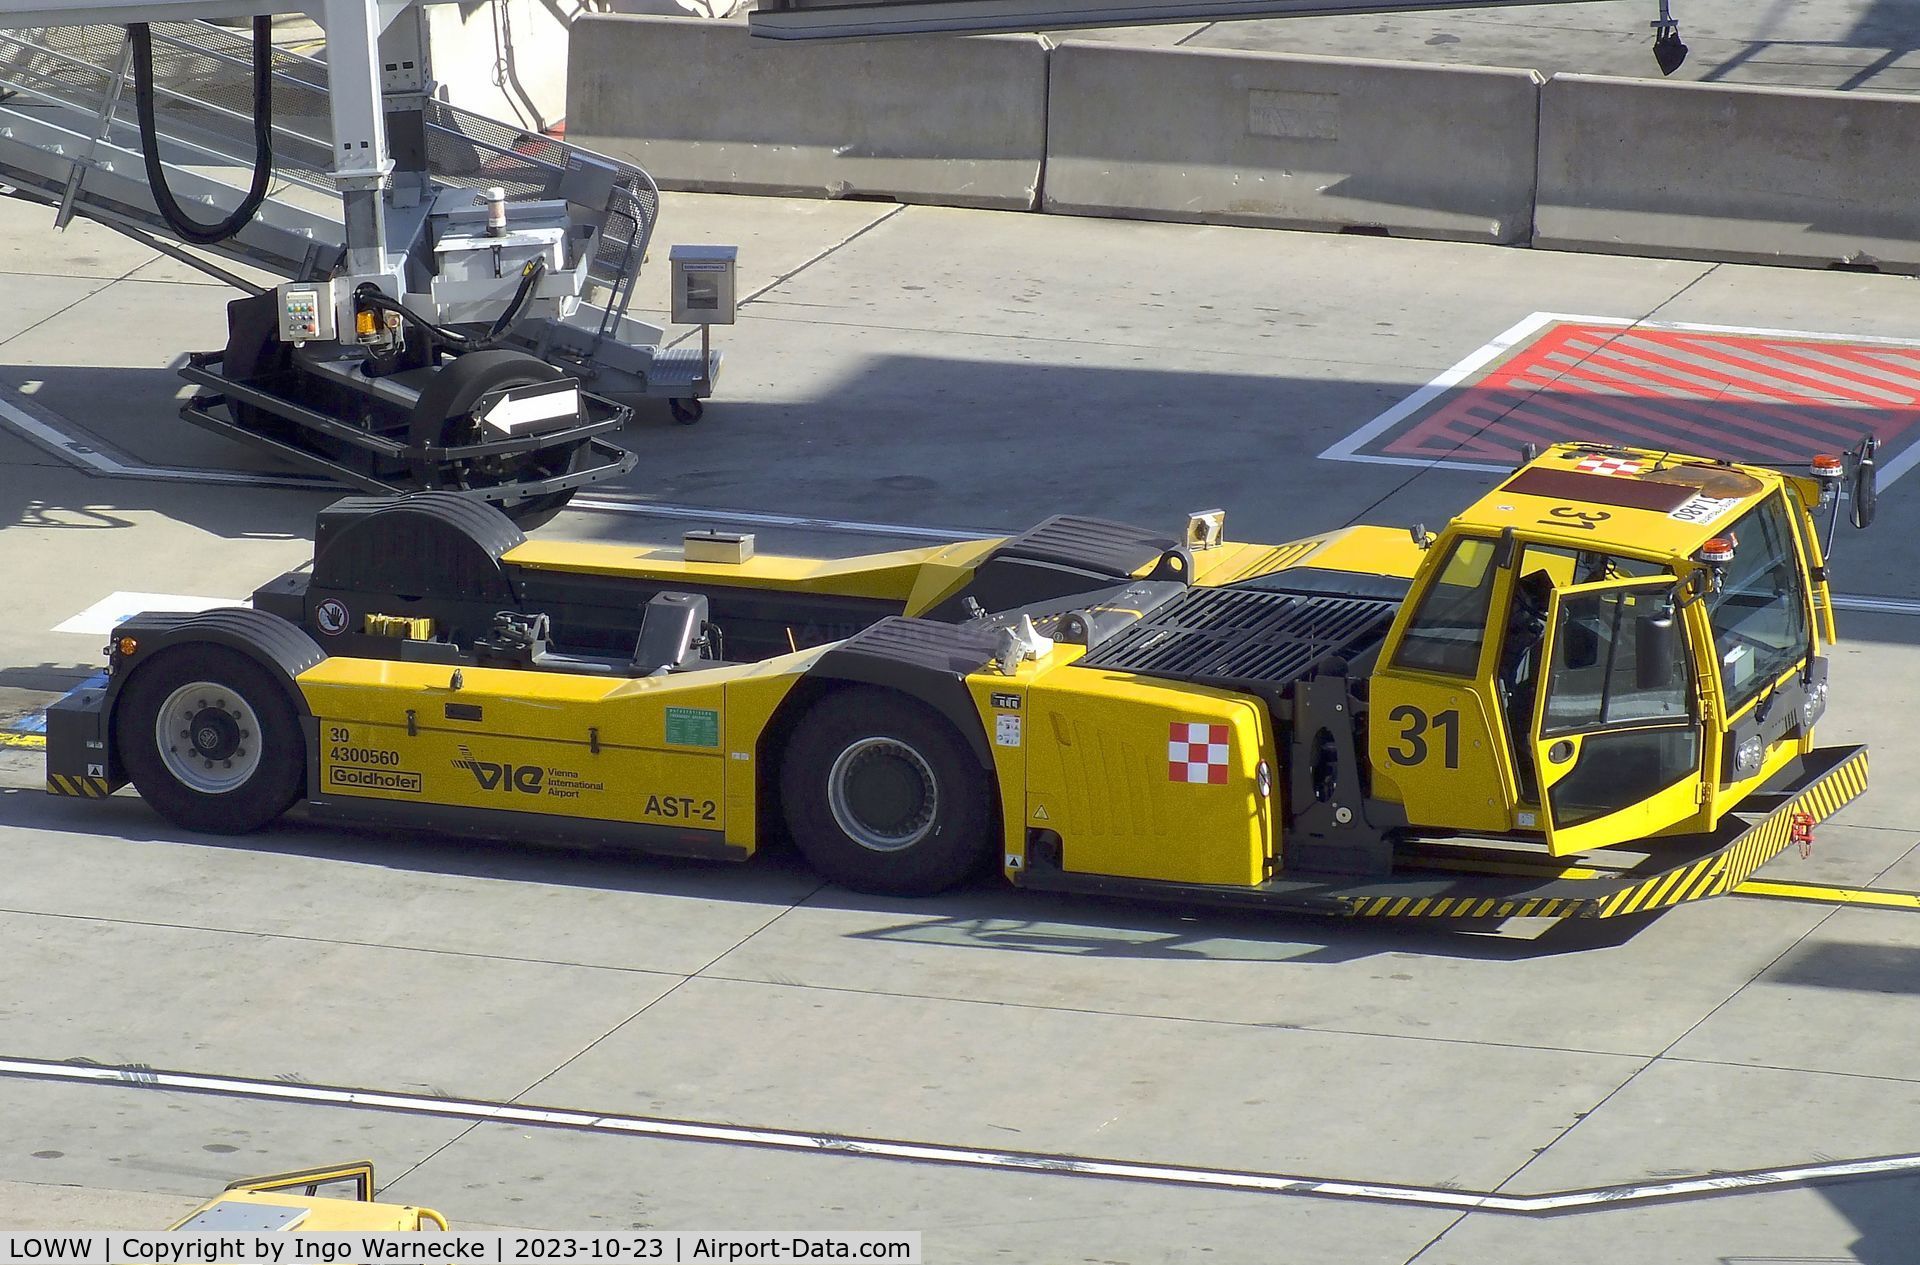 Vienna International Airport, Vienna Austria (LOWW) - pushback tug at Wien airport